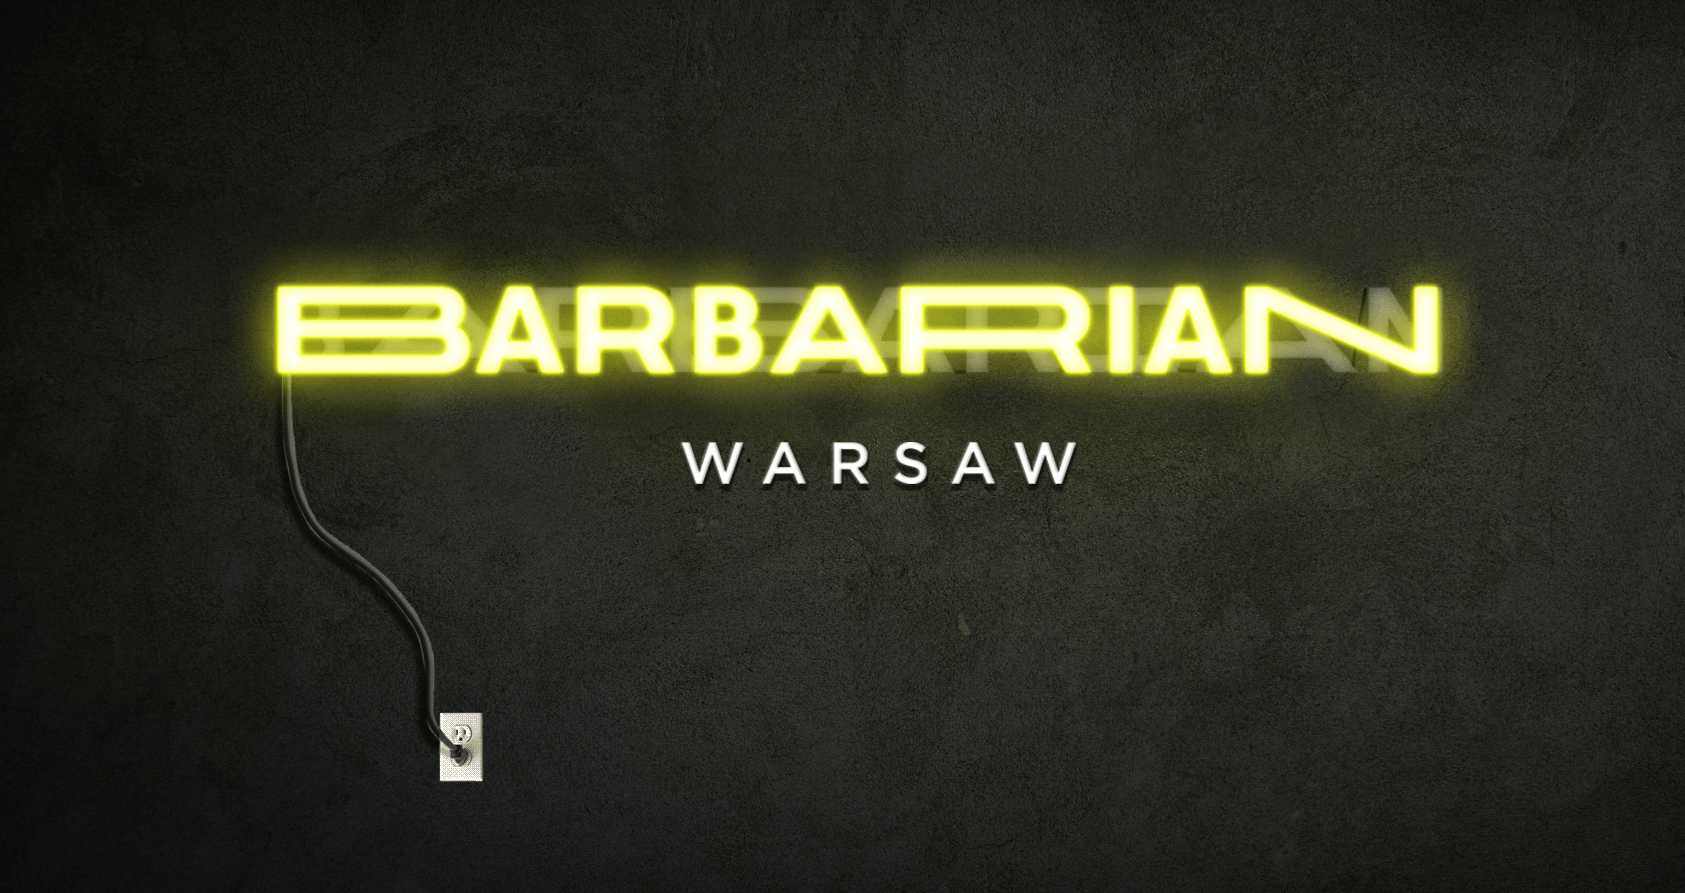 Barbarian_Warsaw_Neon